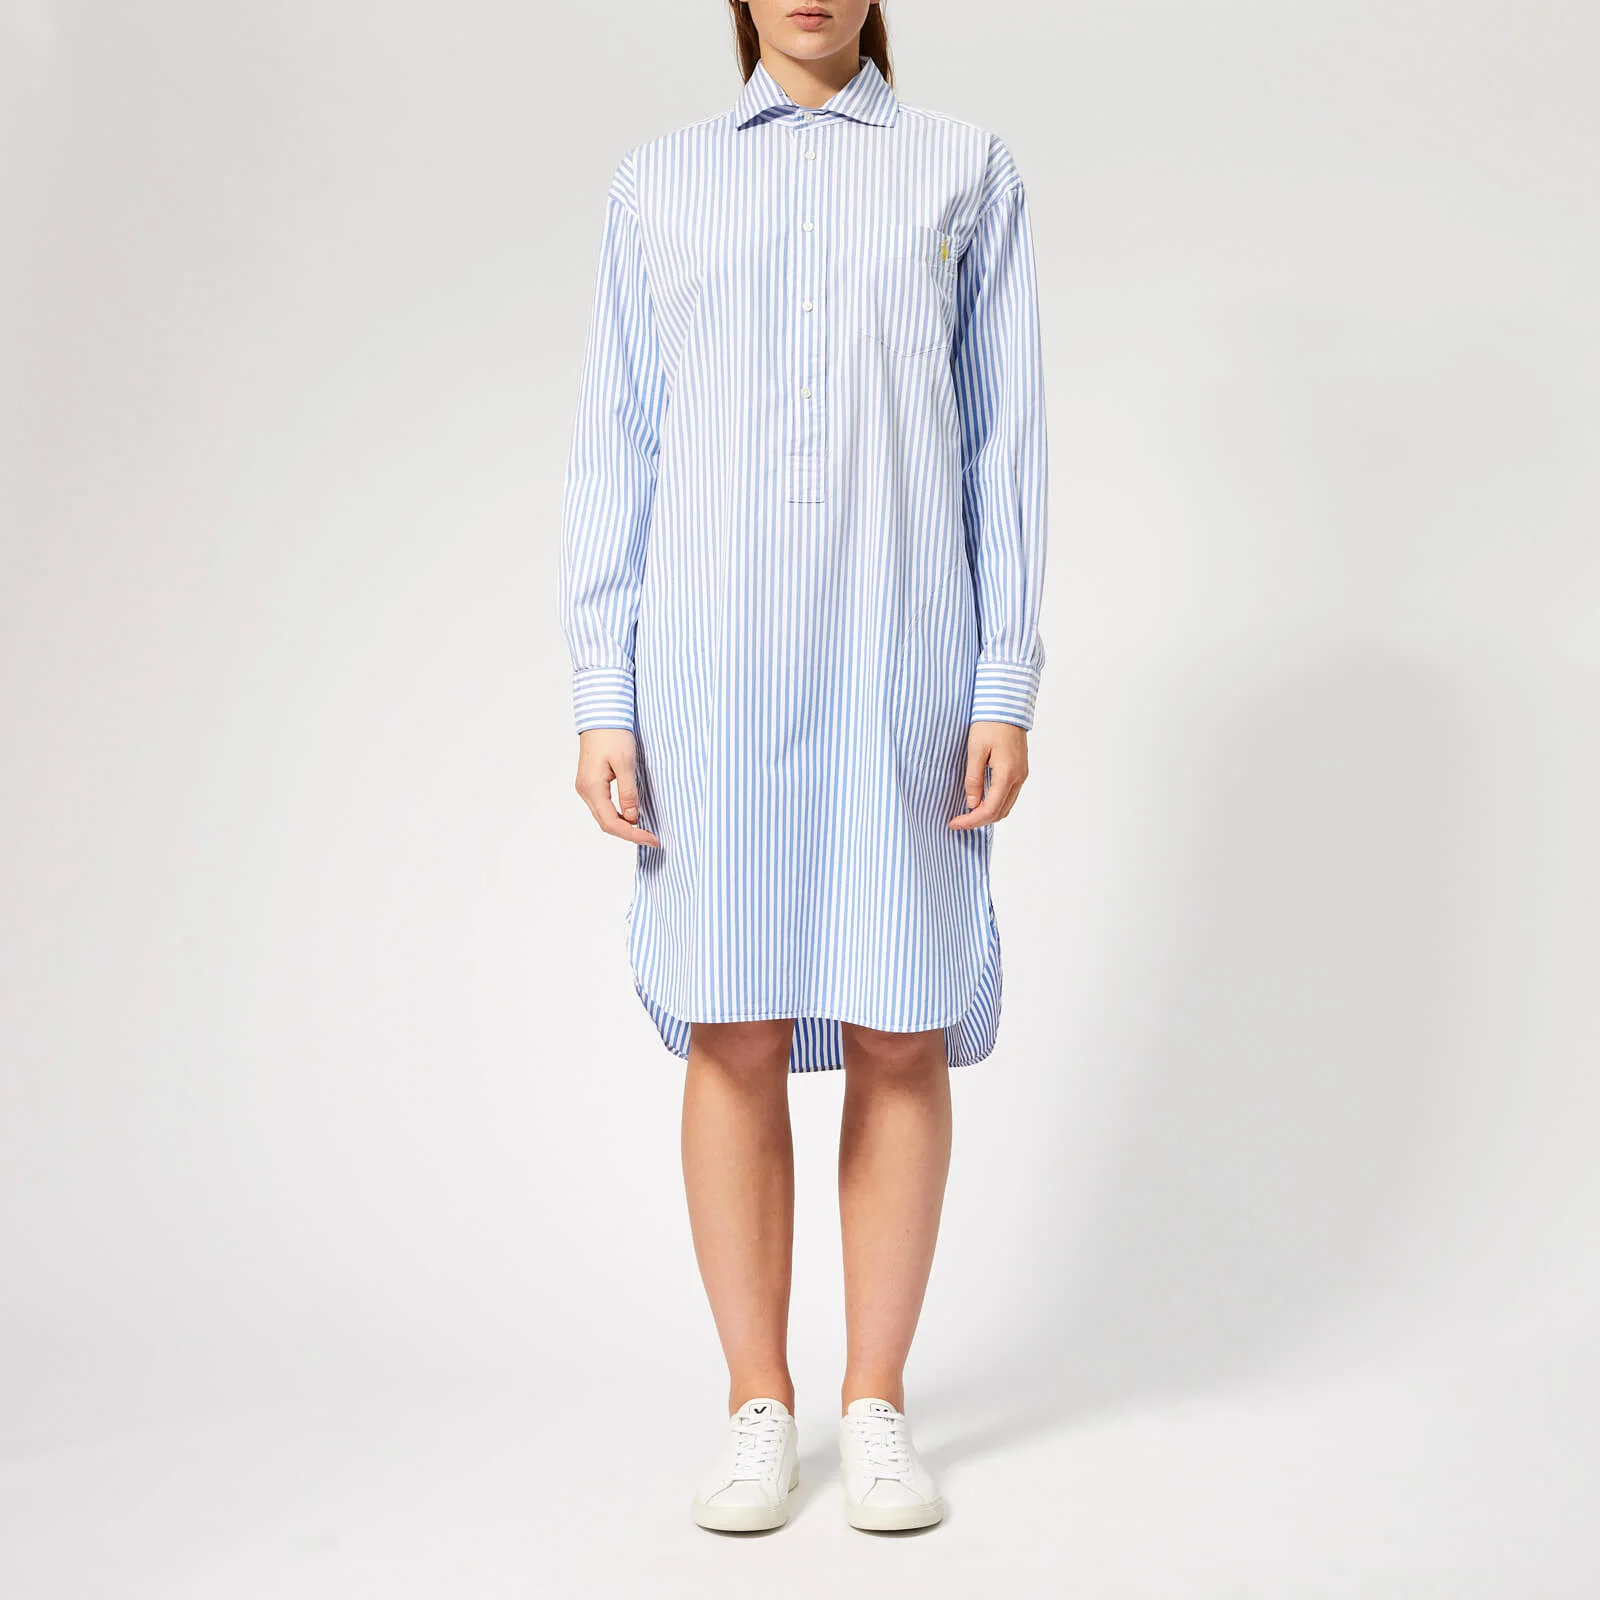 Polo Ralph Lauren Women's Chigo Shirt Dress - Blue/White Image 1